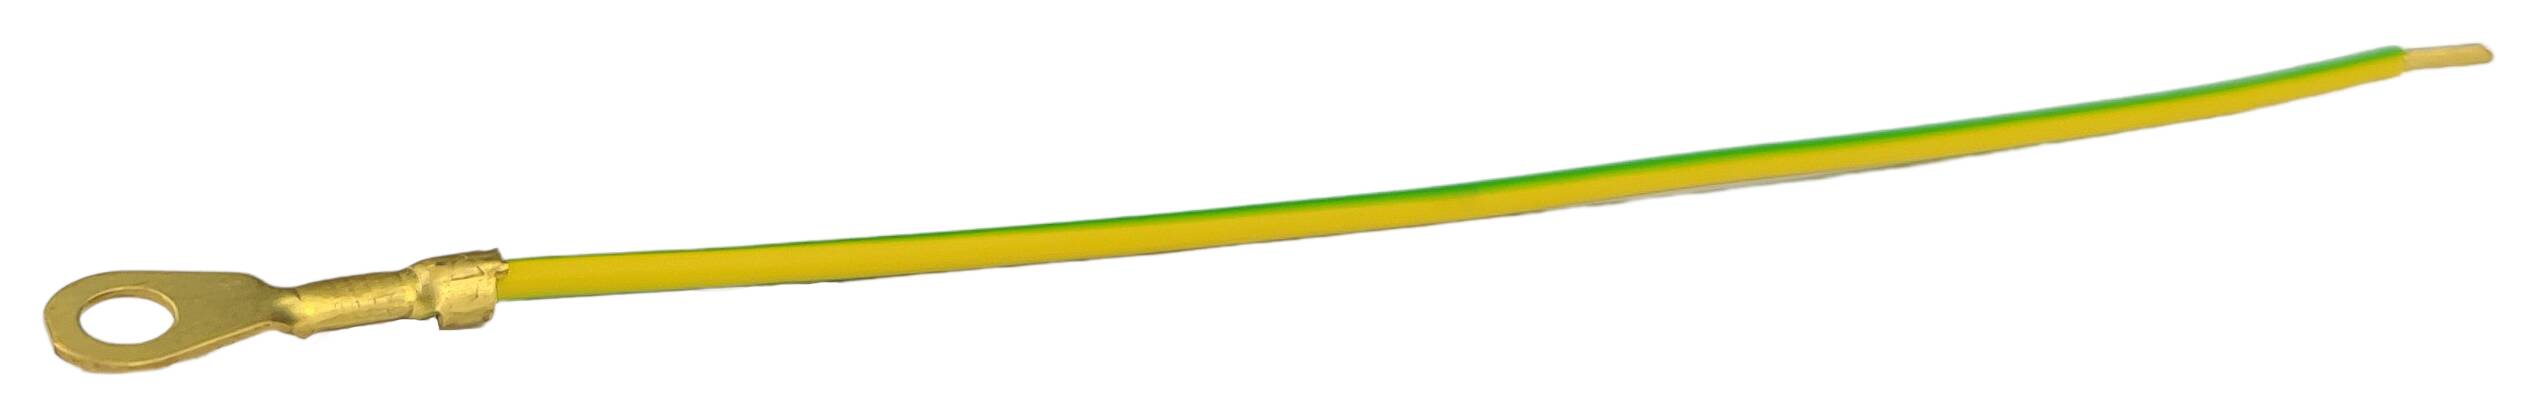 Litzen-Zuschnitt 1x0,75 H05V-K 150 mm lg. m. Ringöse M4 freies Ende 30 AE grün-gelb